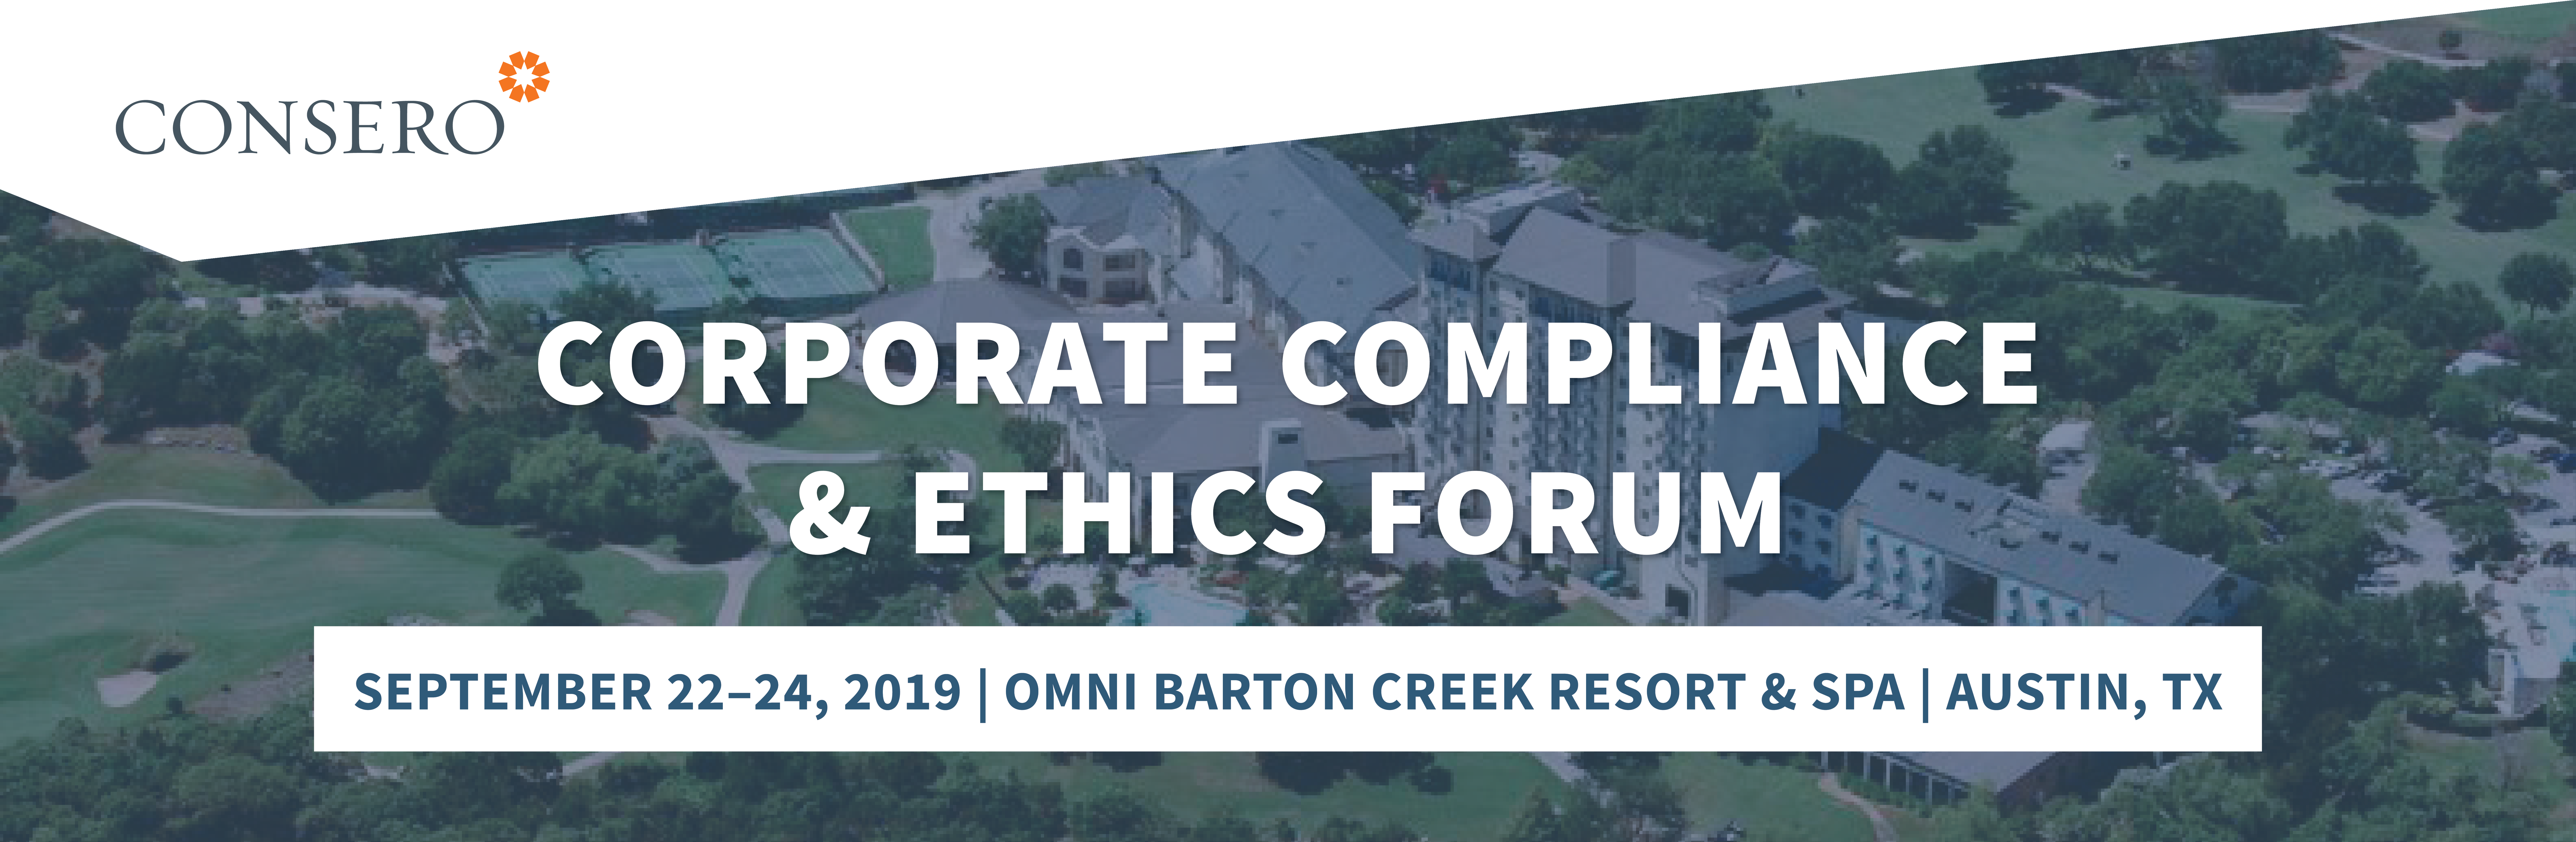 Corporate Compliance & Ethics Forum